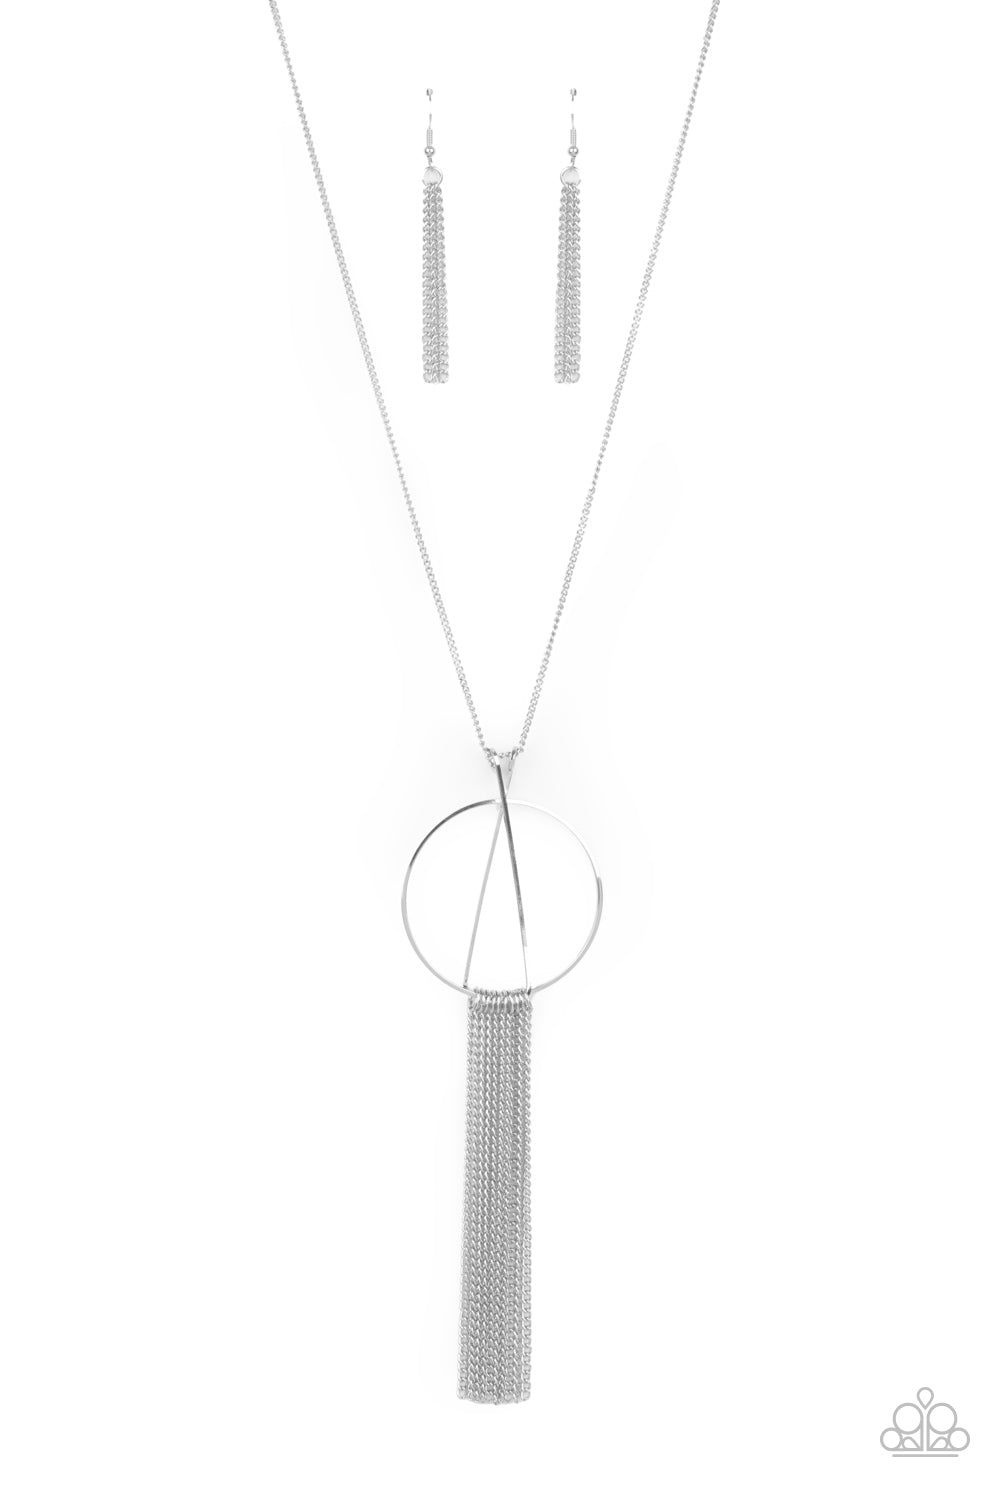 Apparatus Applique - Silver Necklace freeshipping - JewLz4u Gemstone Gallery